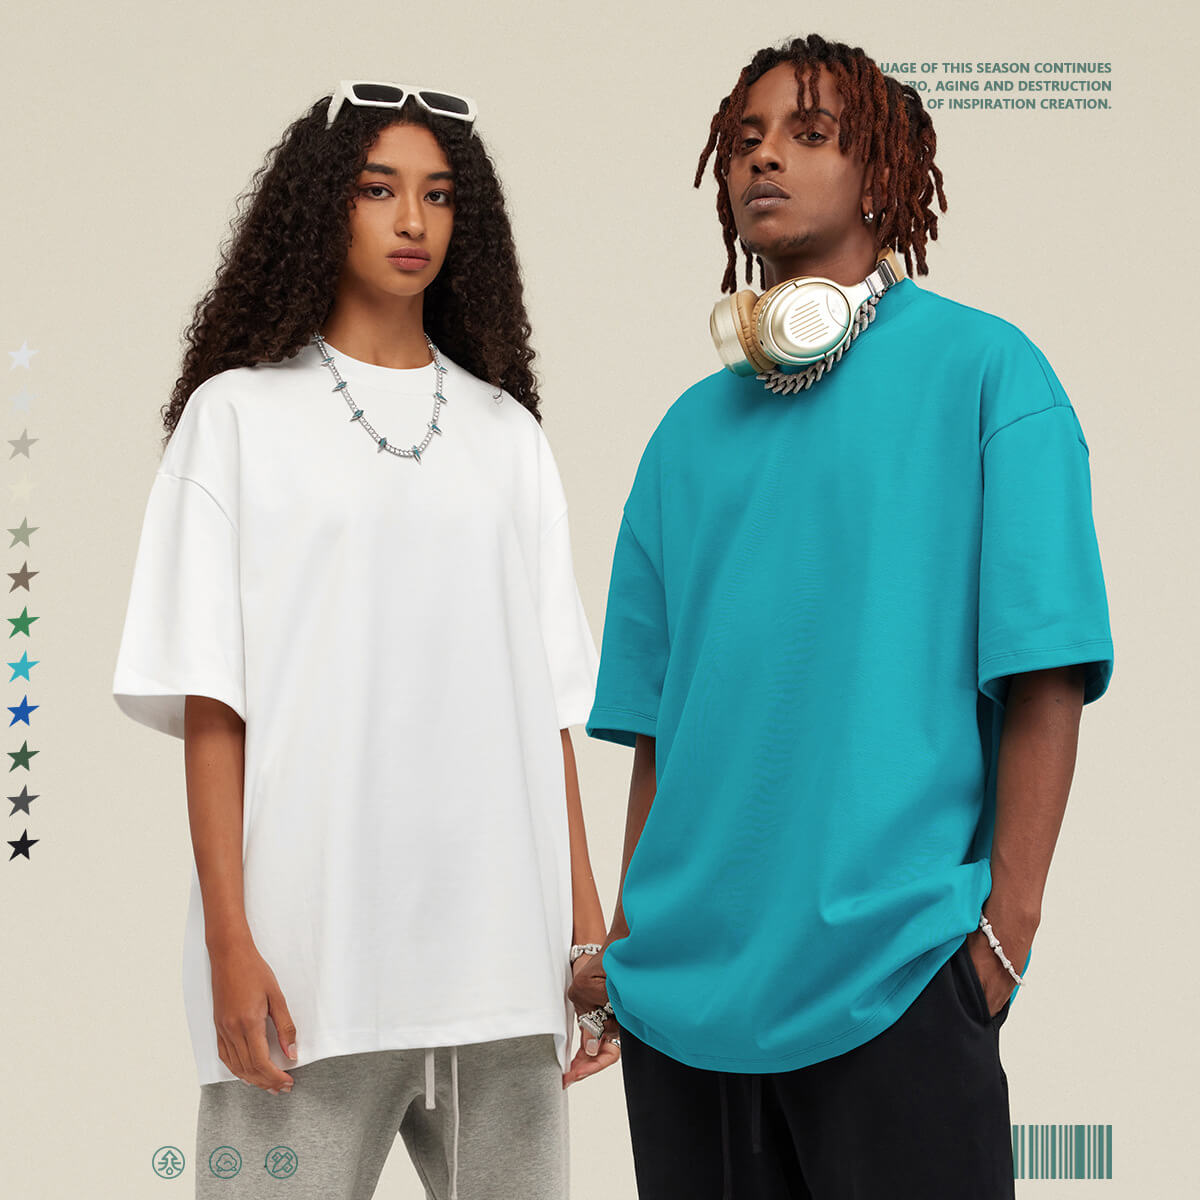 Text Logo Design Streetwear Cotton Jersey Blank Tshirt kids Drop Shoulder  Custom Loose Fit